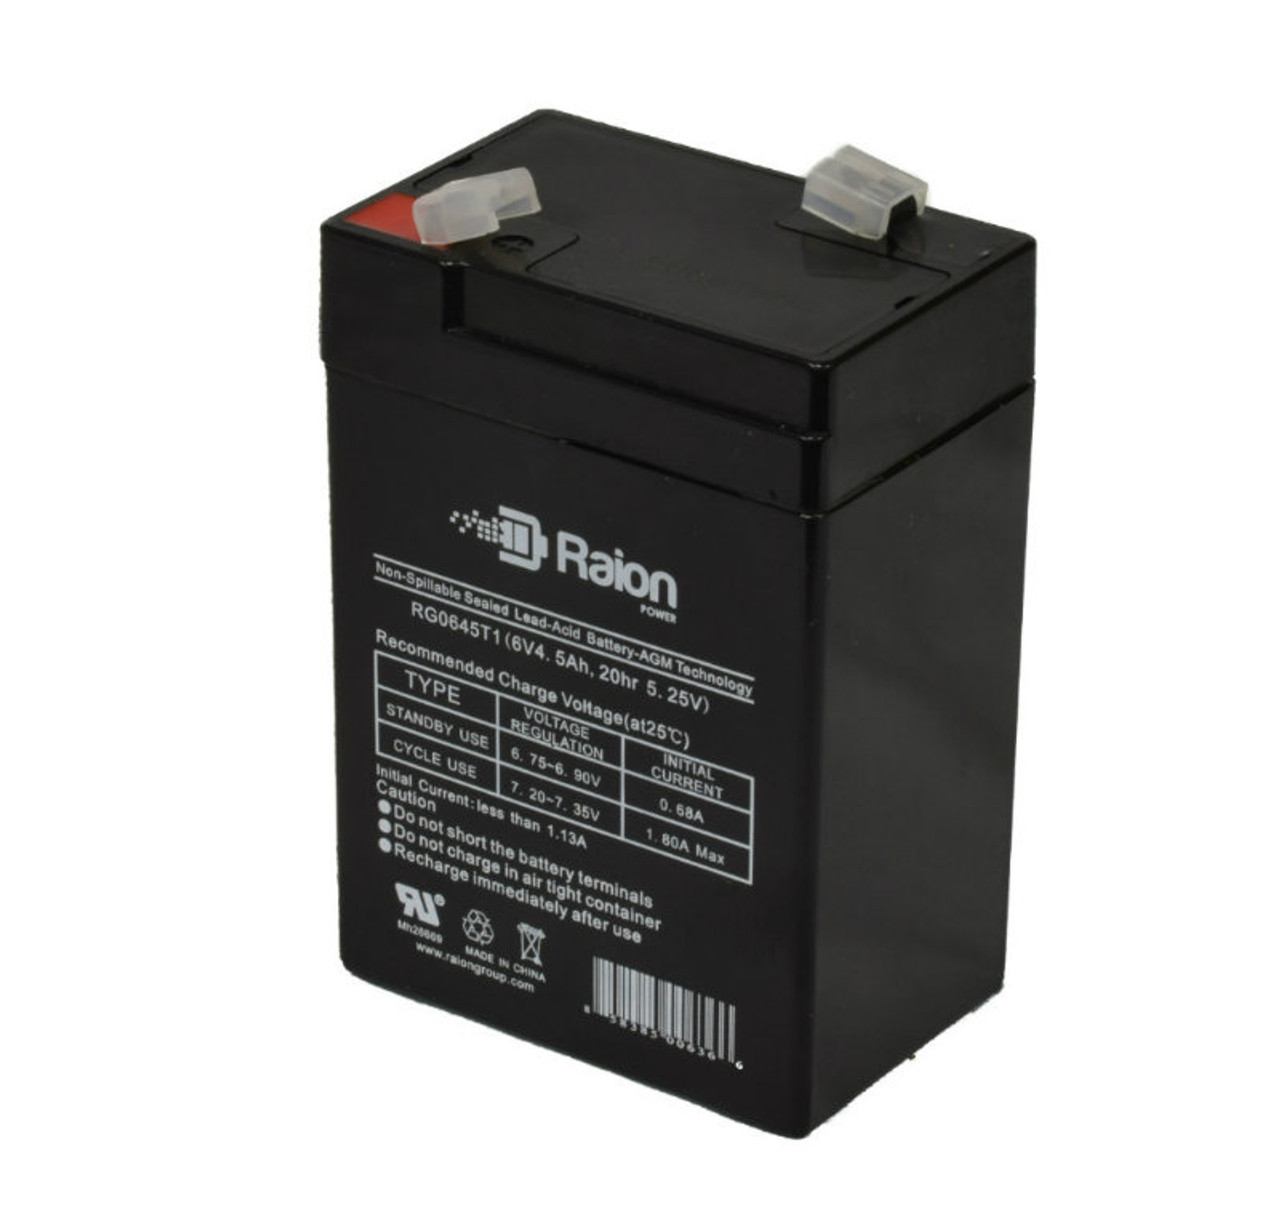 Raion Power RG0645T1 6V 4.5Ah Replacement Battery Cartridge for Razor 20115230 Jr. Mini Mod Green